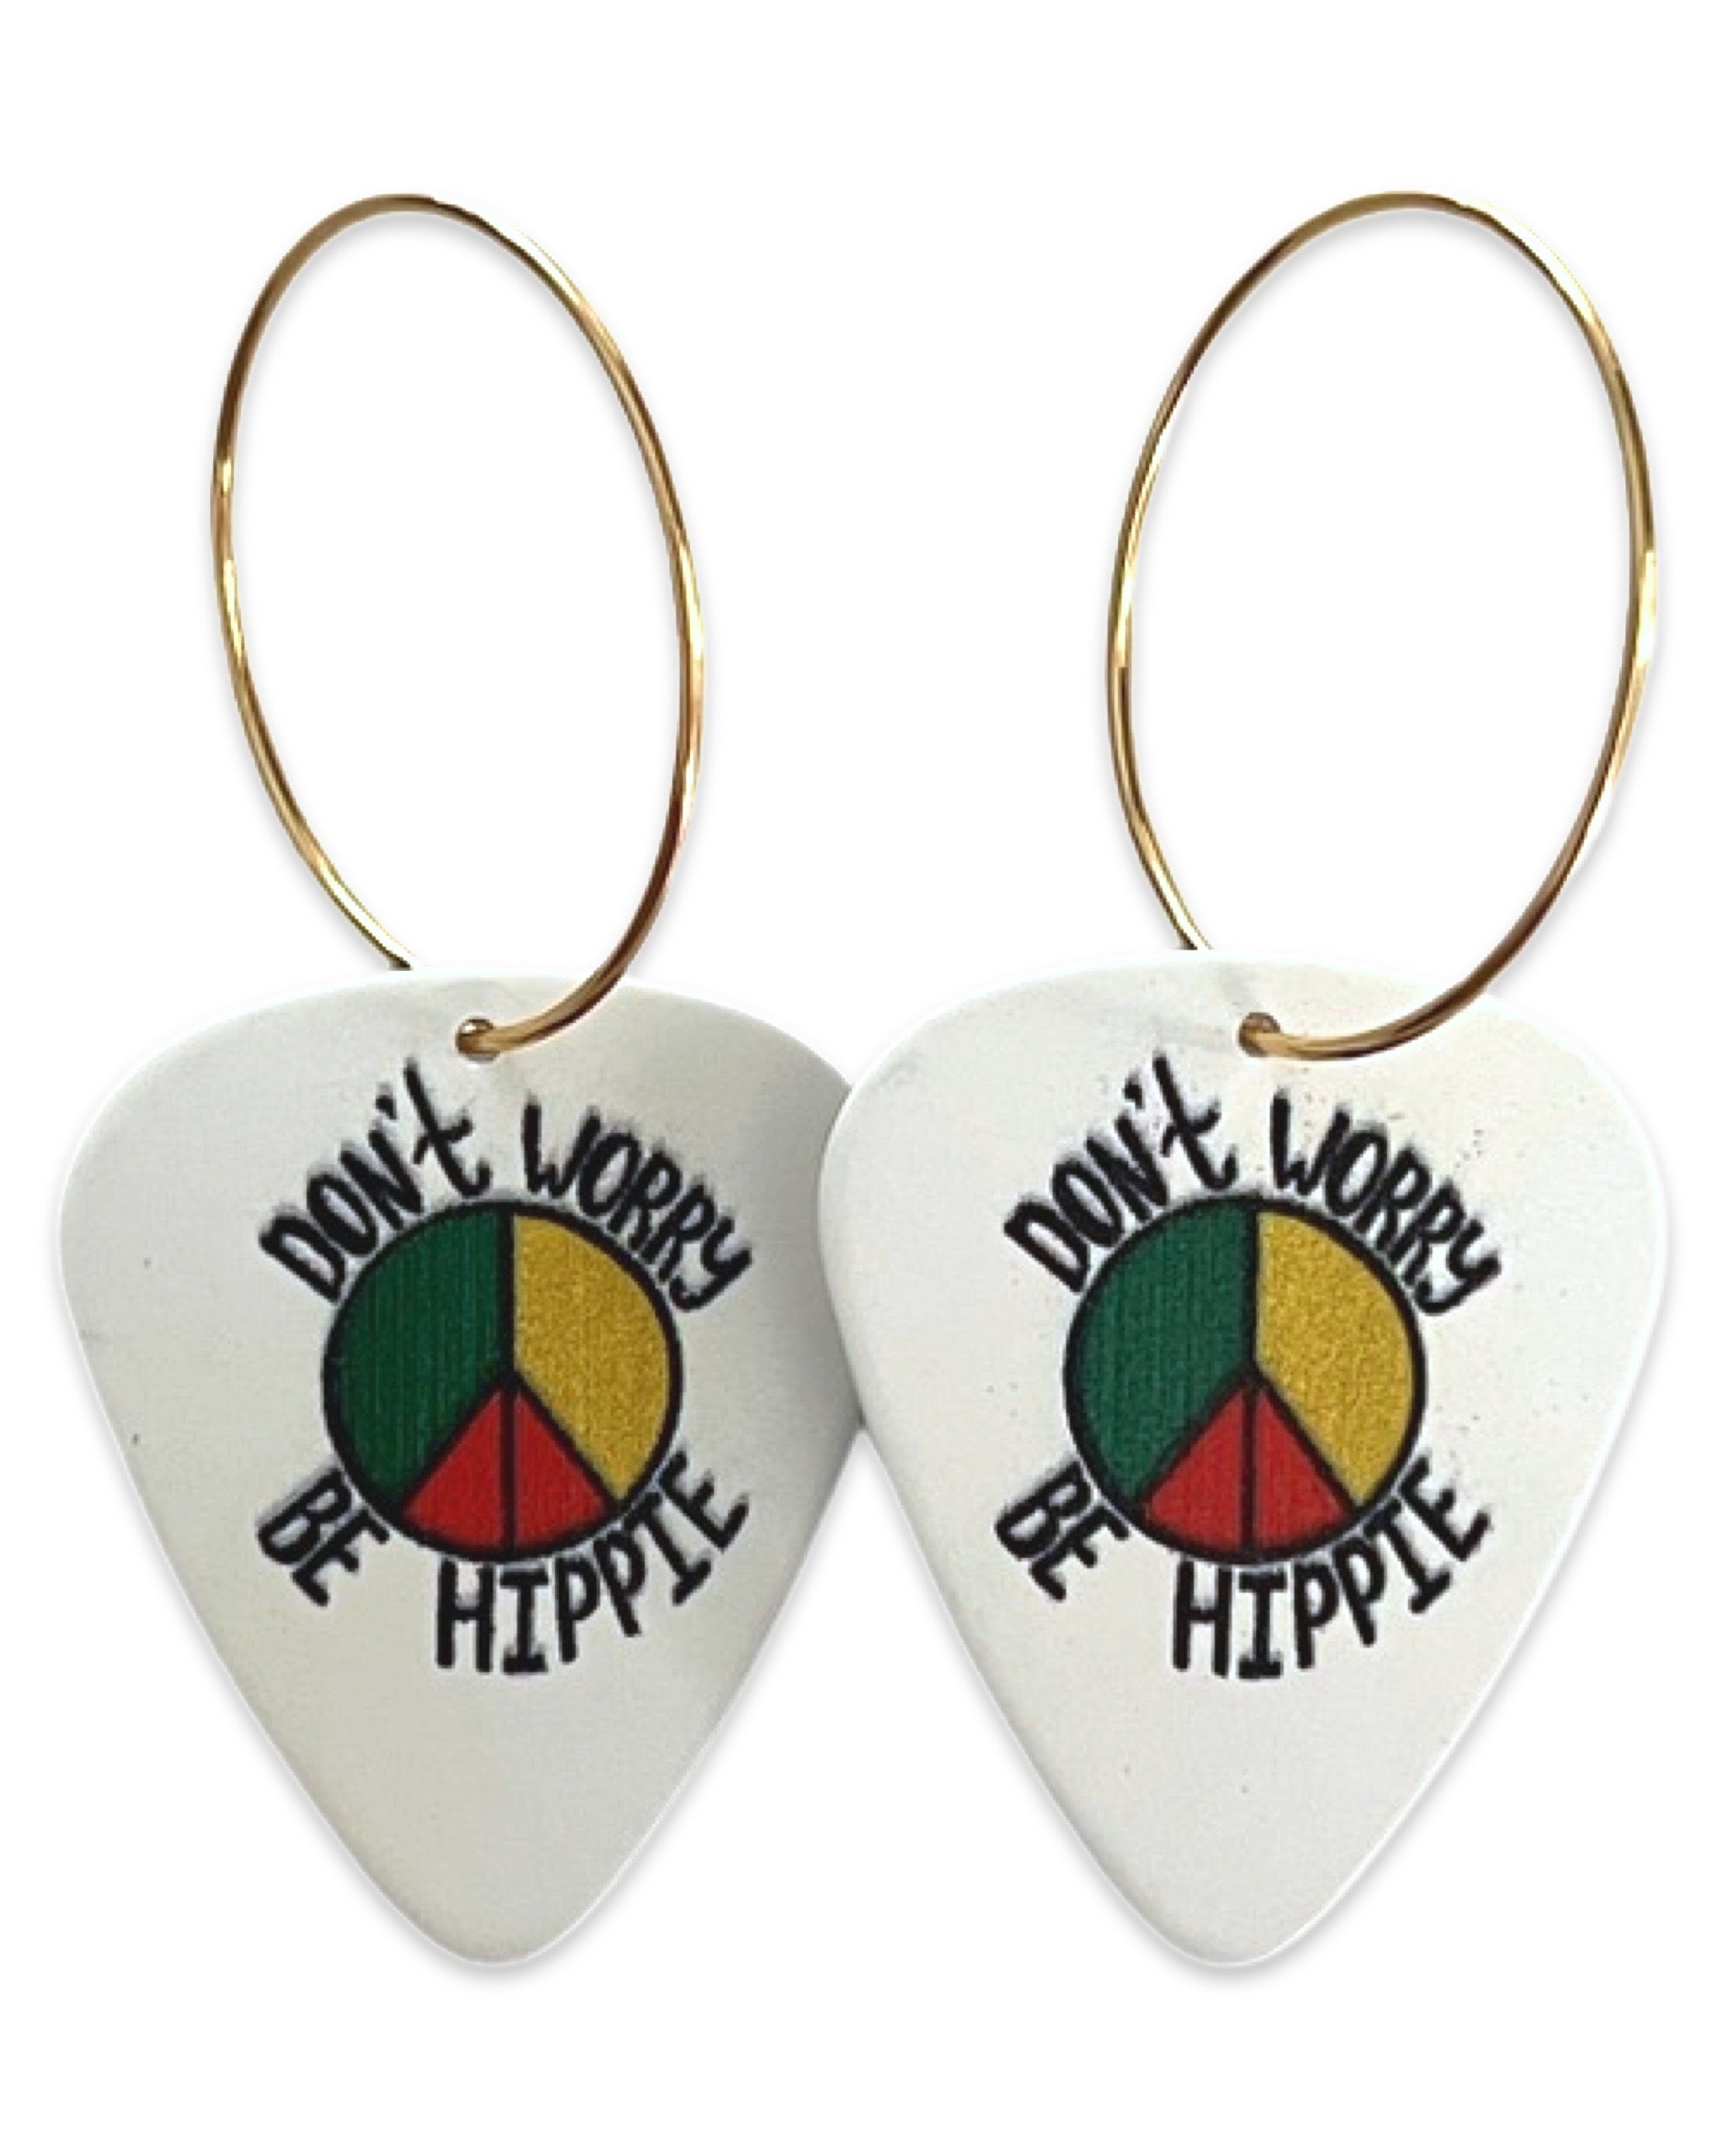 Don't Worry Be Hippie Reversible Single Guitar Pick Earrings